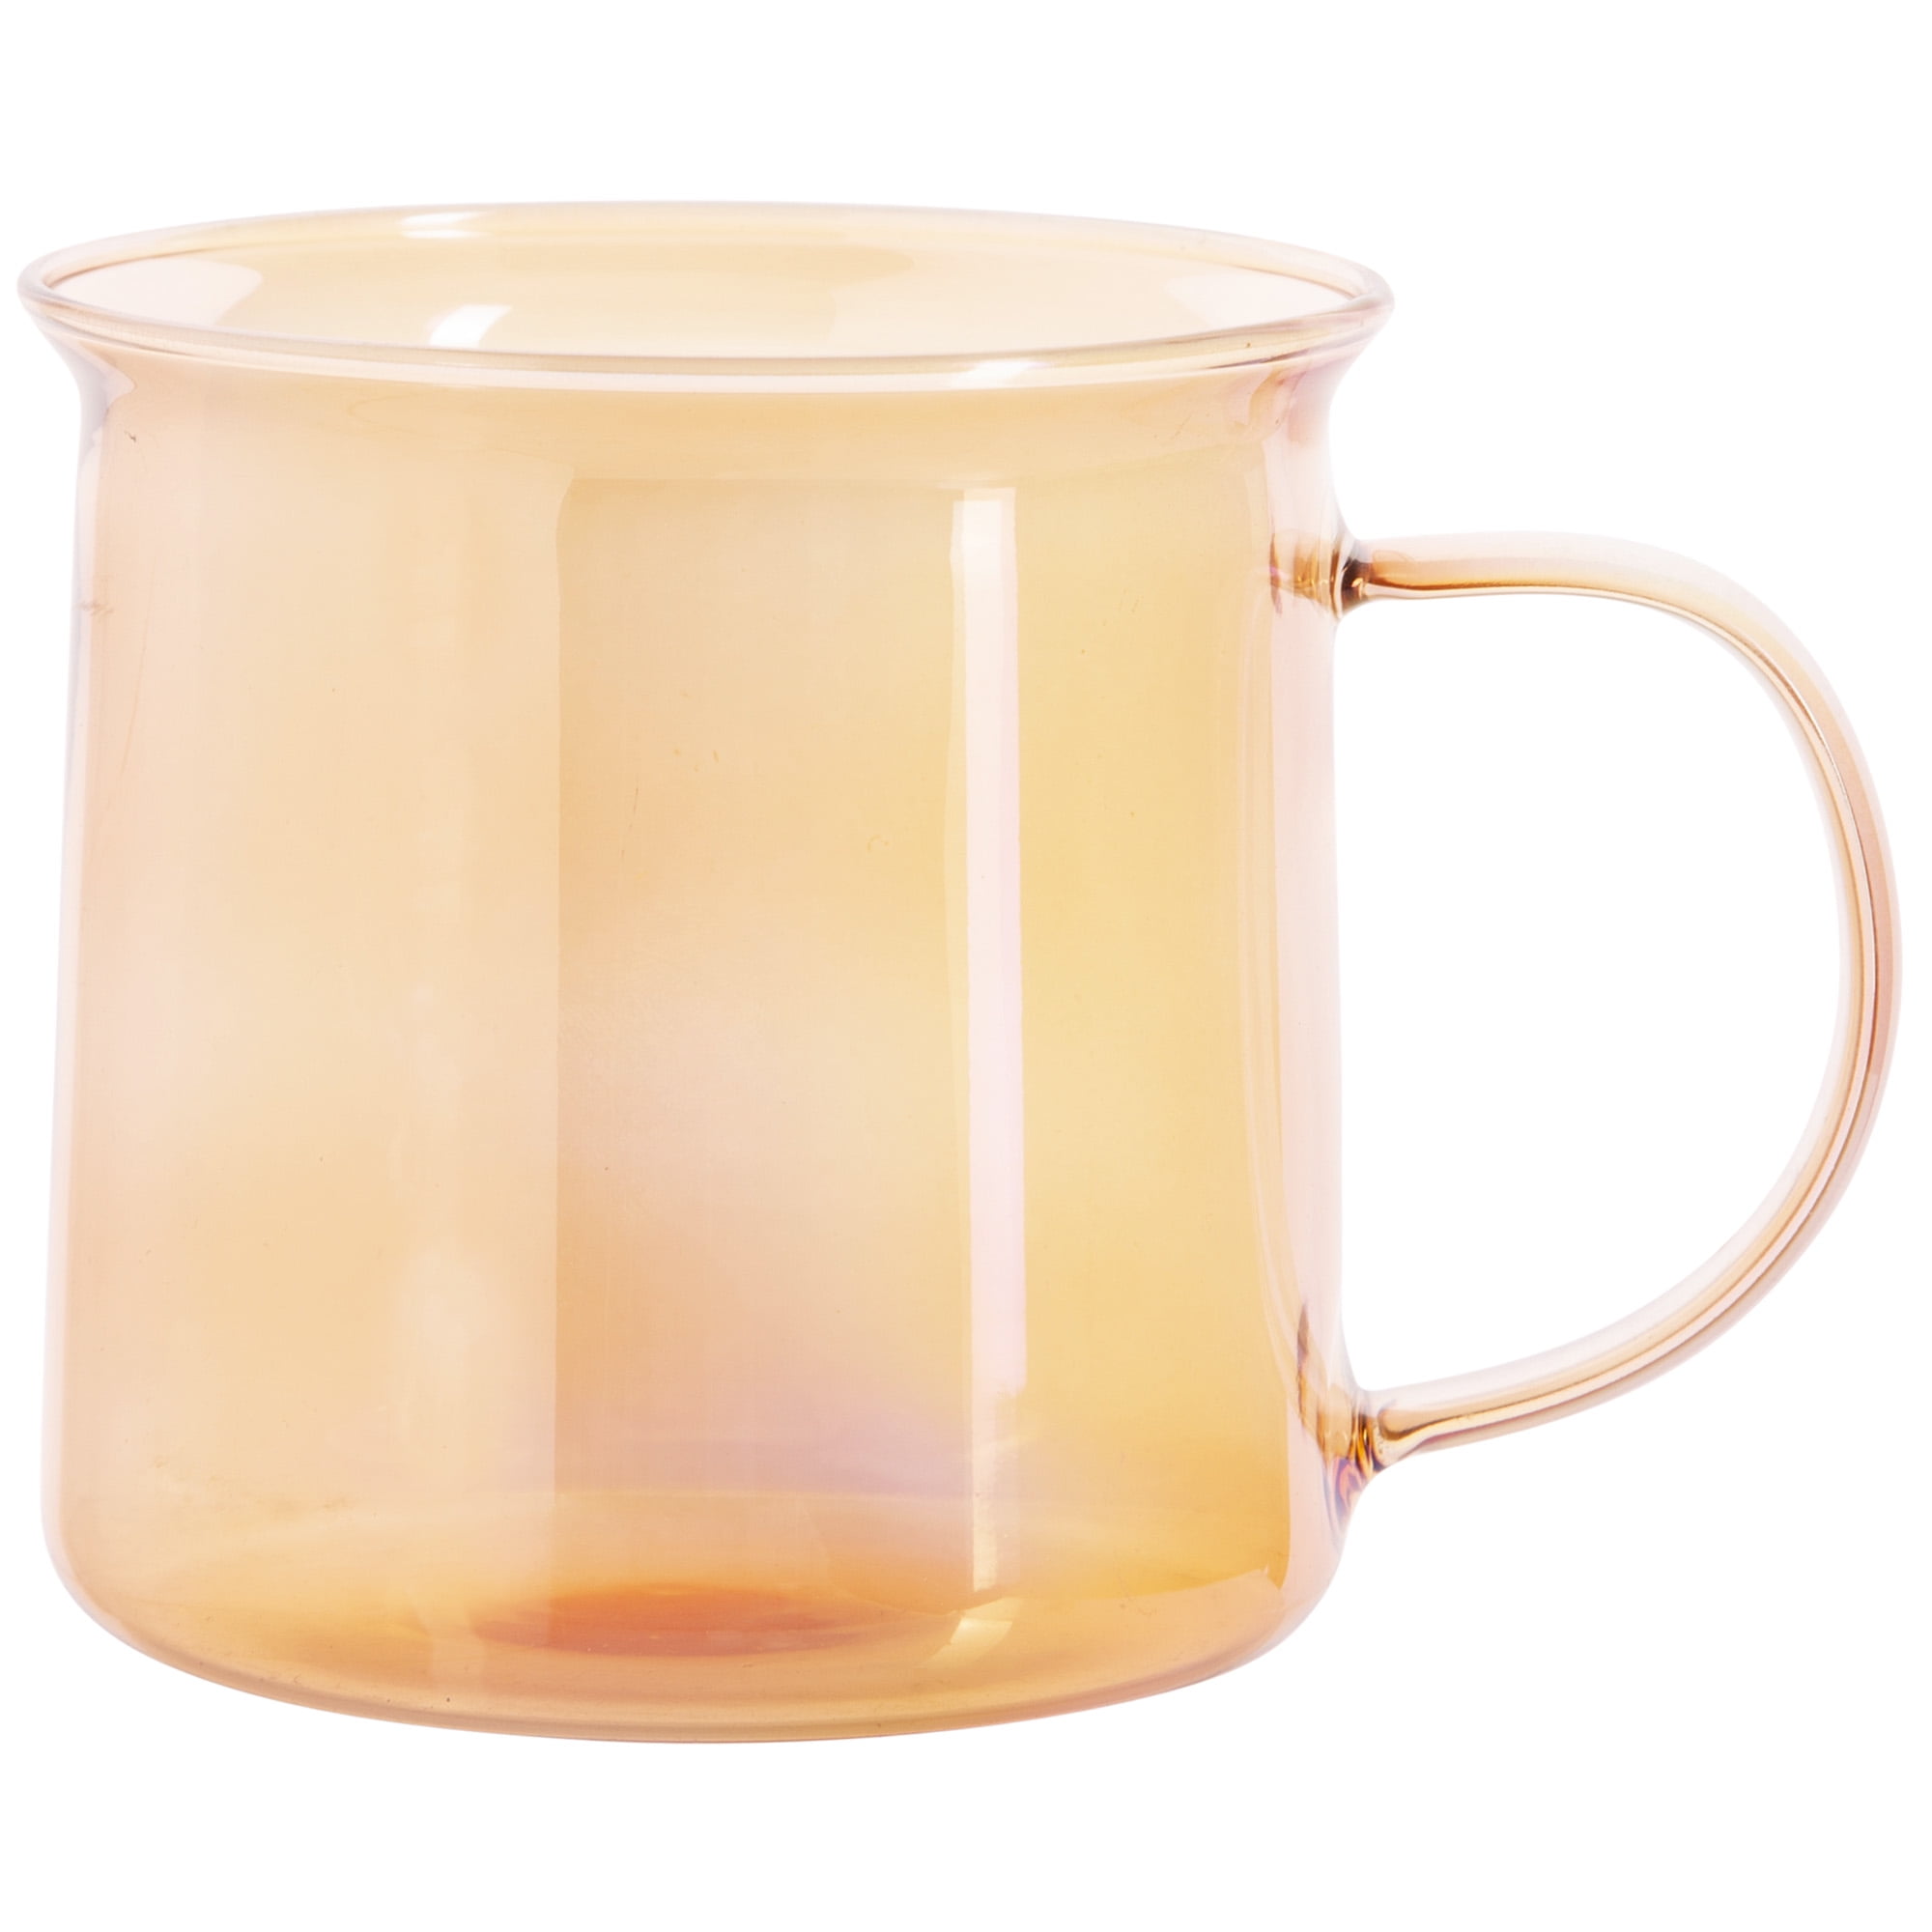 MasterPRO 15.2 fl. oz. Clear Glass Mugs (Set of 2) MPUS60306 - The